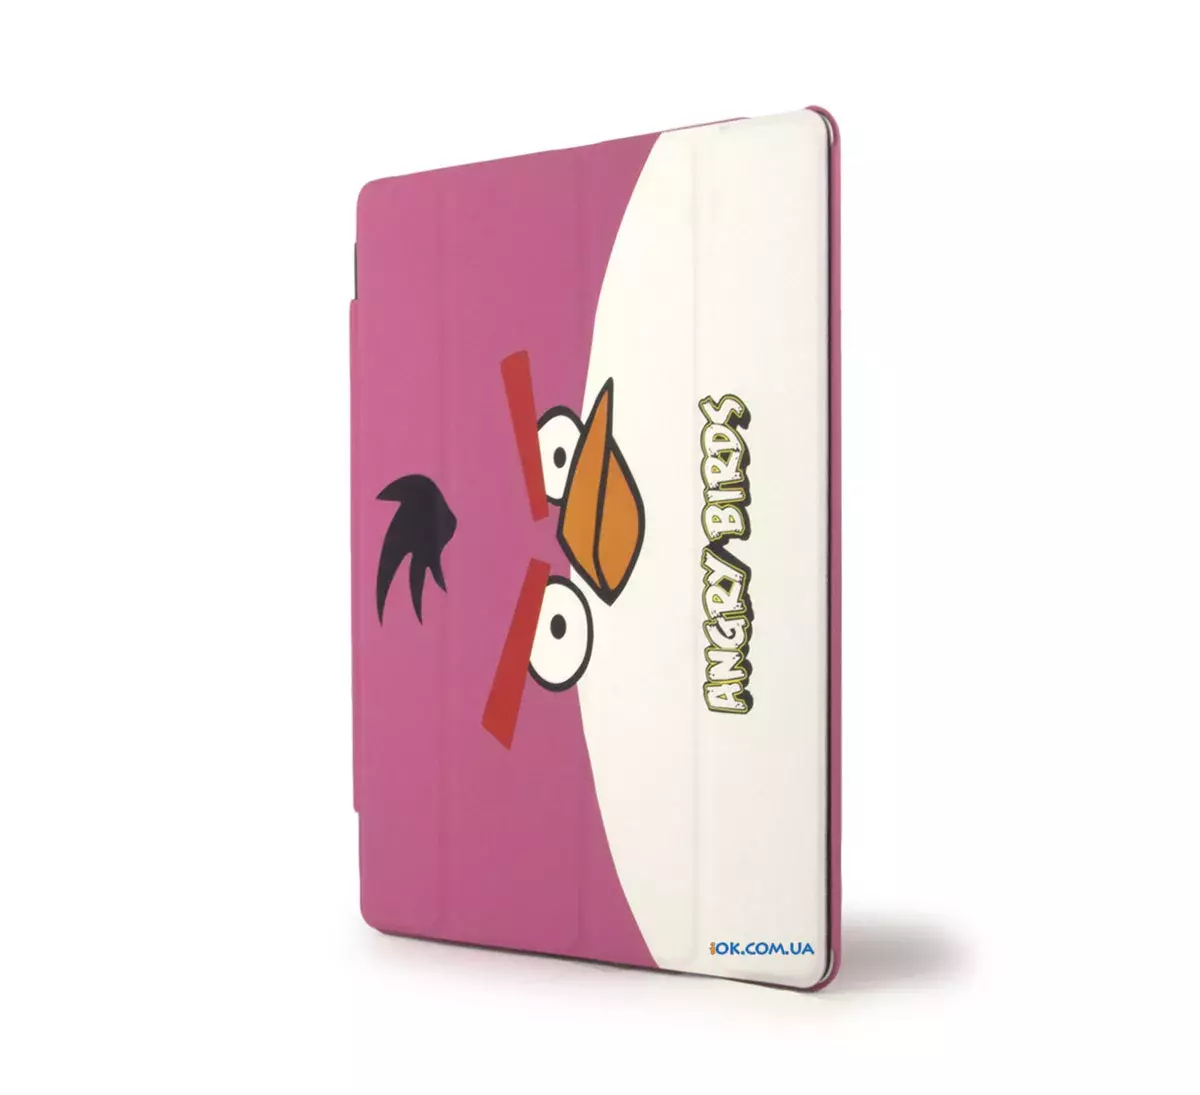 Чехол Smart Cover Angry Birds для iPad 2/3, малиновый